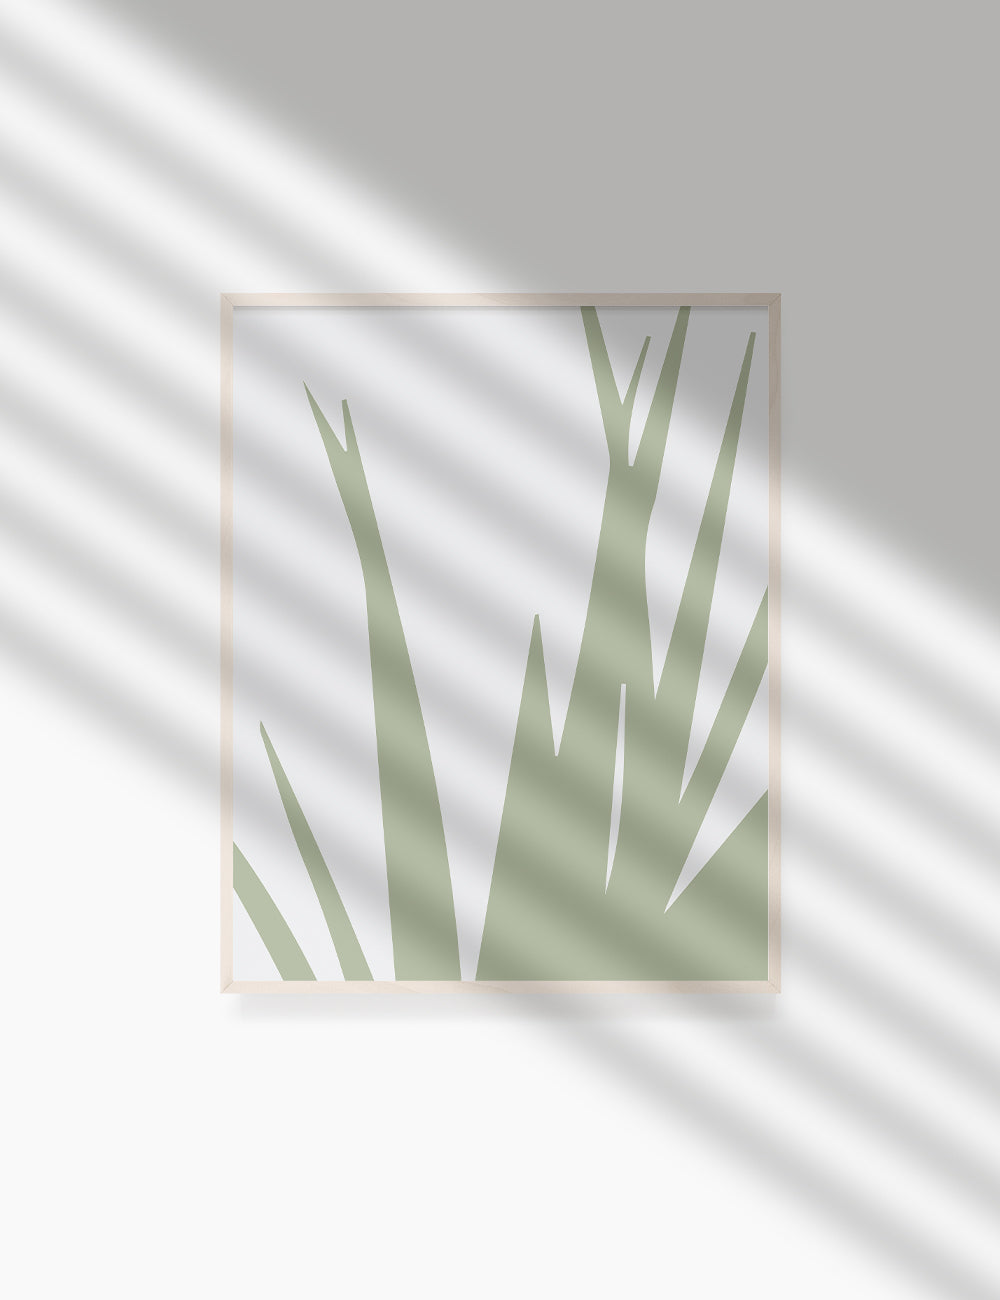 LEAVES. GRASS. MINIMALIST BOTANICAL BOHO ART. GREEN AND BEIGE. Minimal Aesthetic. Clean Design. Printable Wall Art Illustration. - PAPER MOON Art & Design